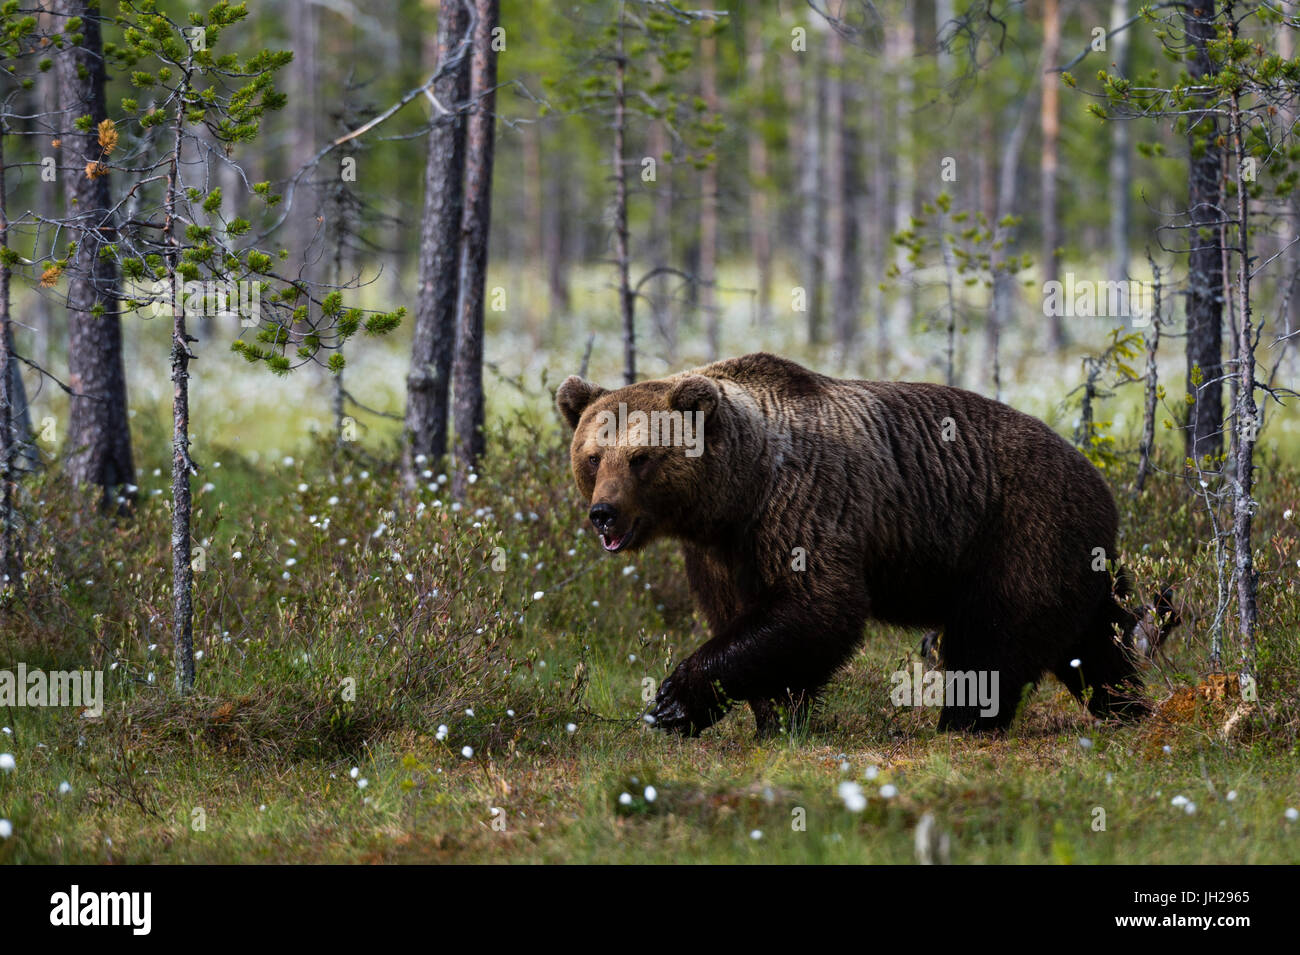 European brown bear (Ursus arctos) walking in the forest, Kuhmo, Finland, Europe Stock Photo